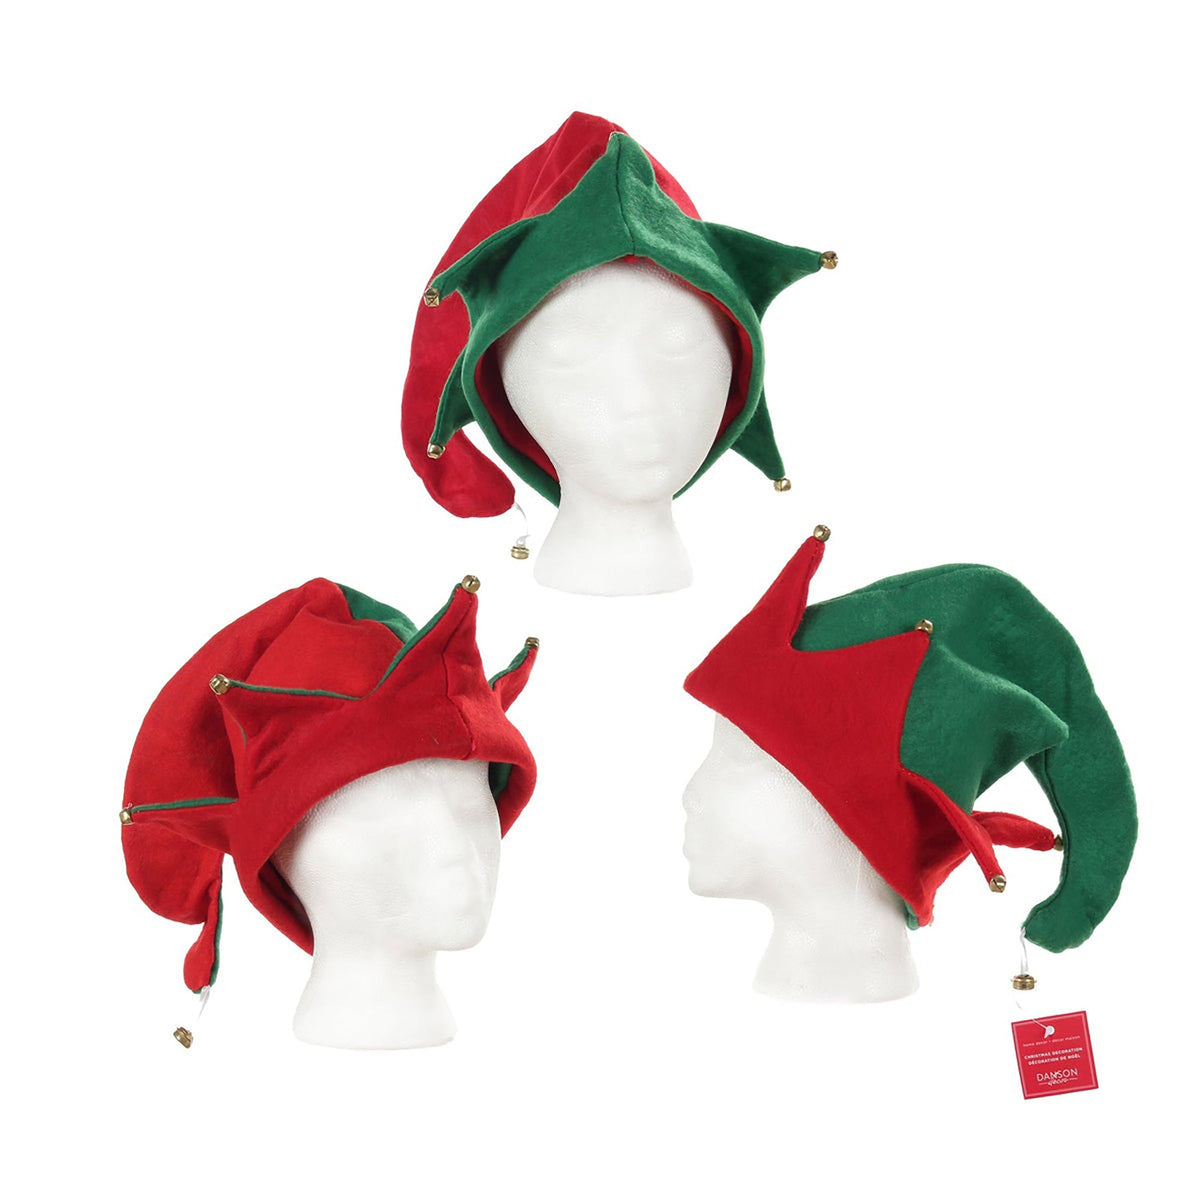 DANSON DECOR Christmas Felt Elf Hat, Green and Red, Assortment, 1 Count